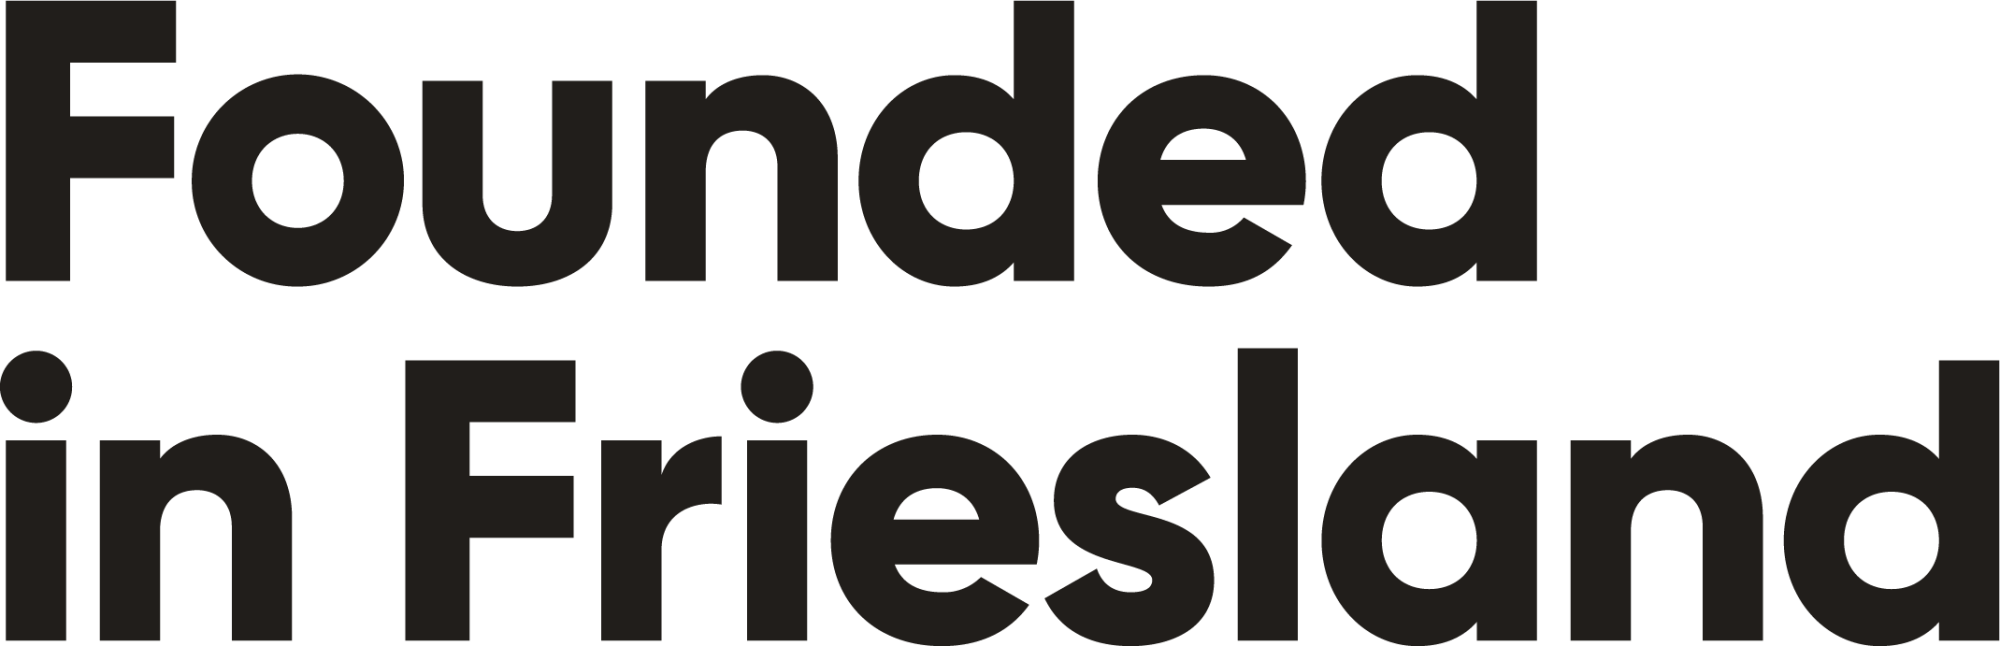 Founded in Friesland logo home in zwarte letters